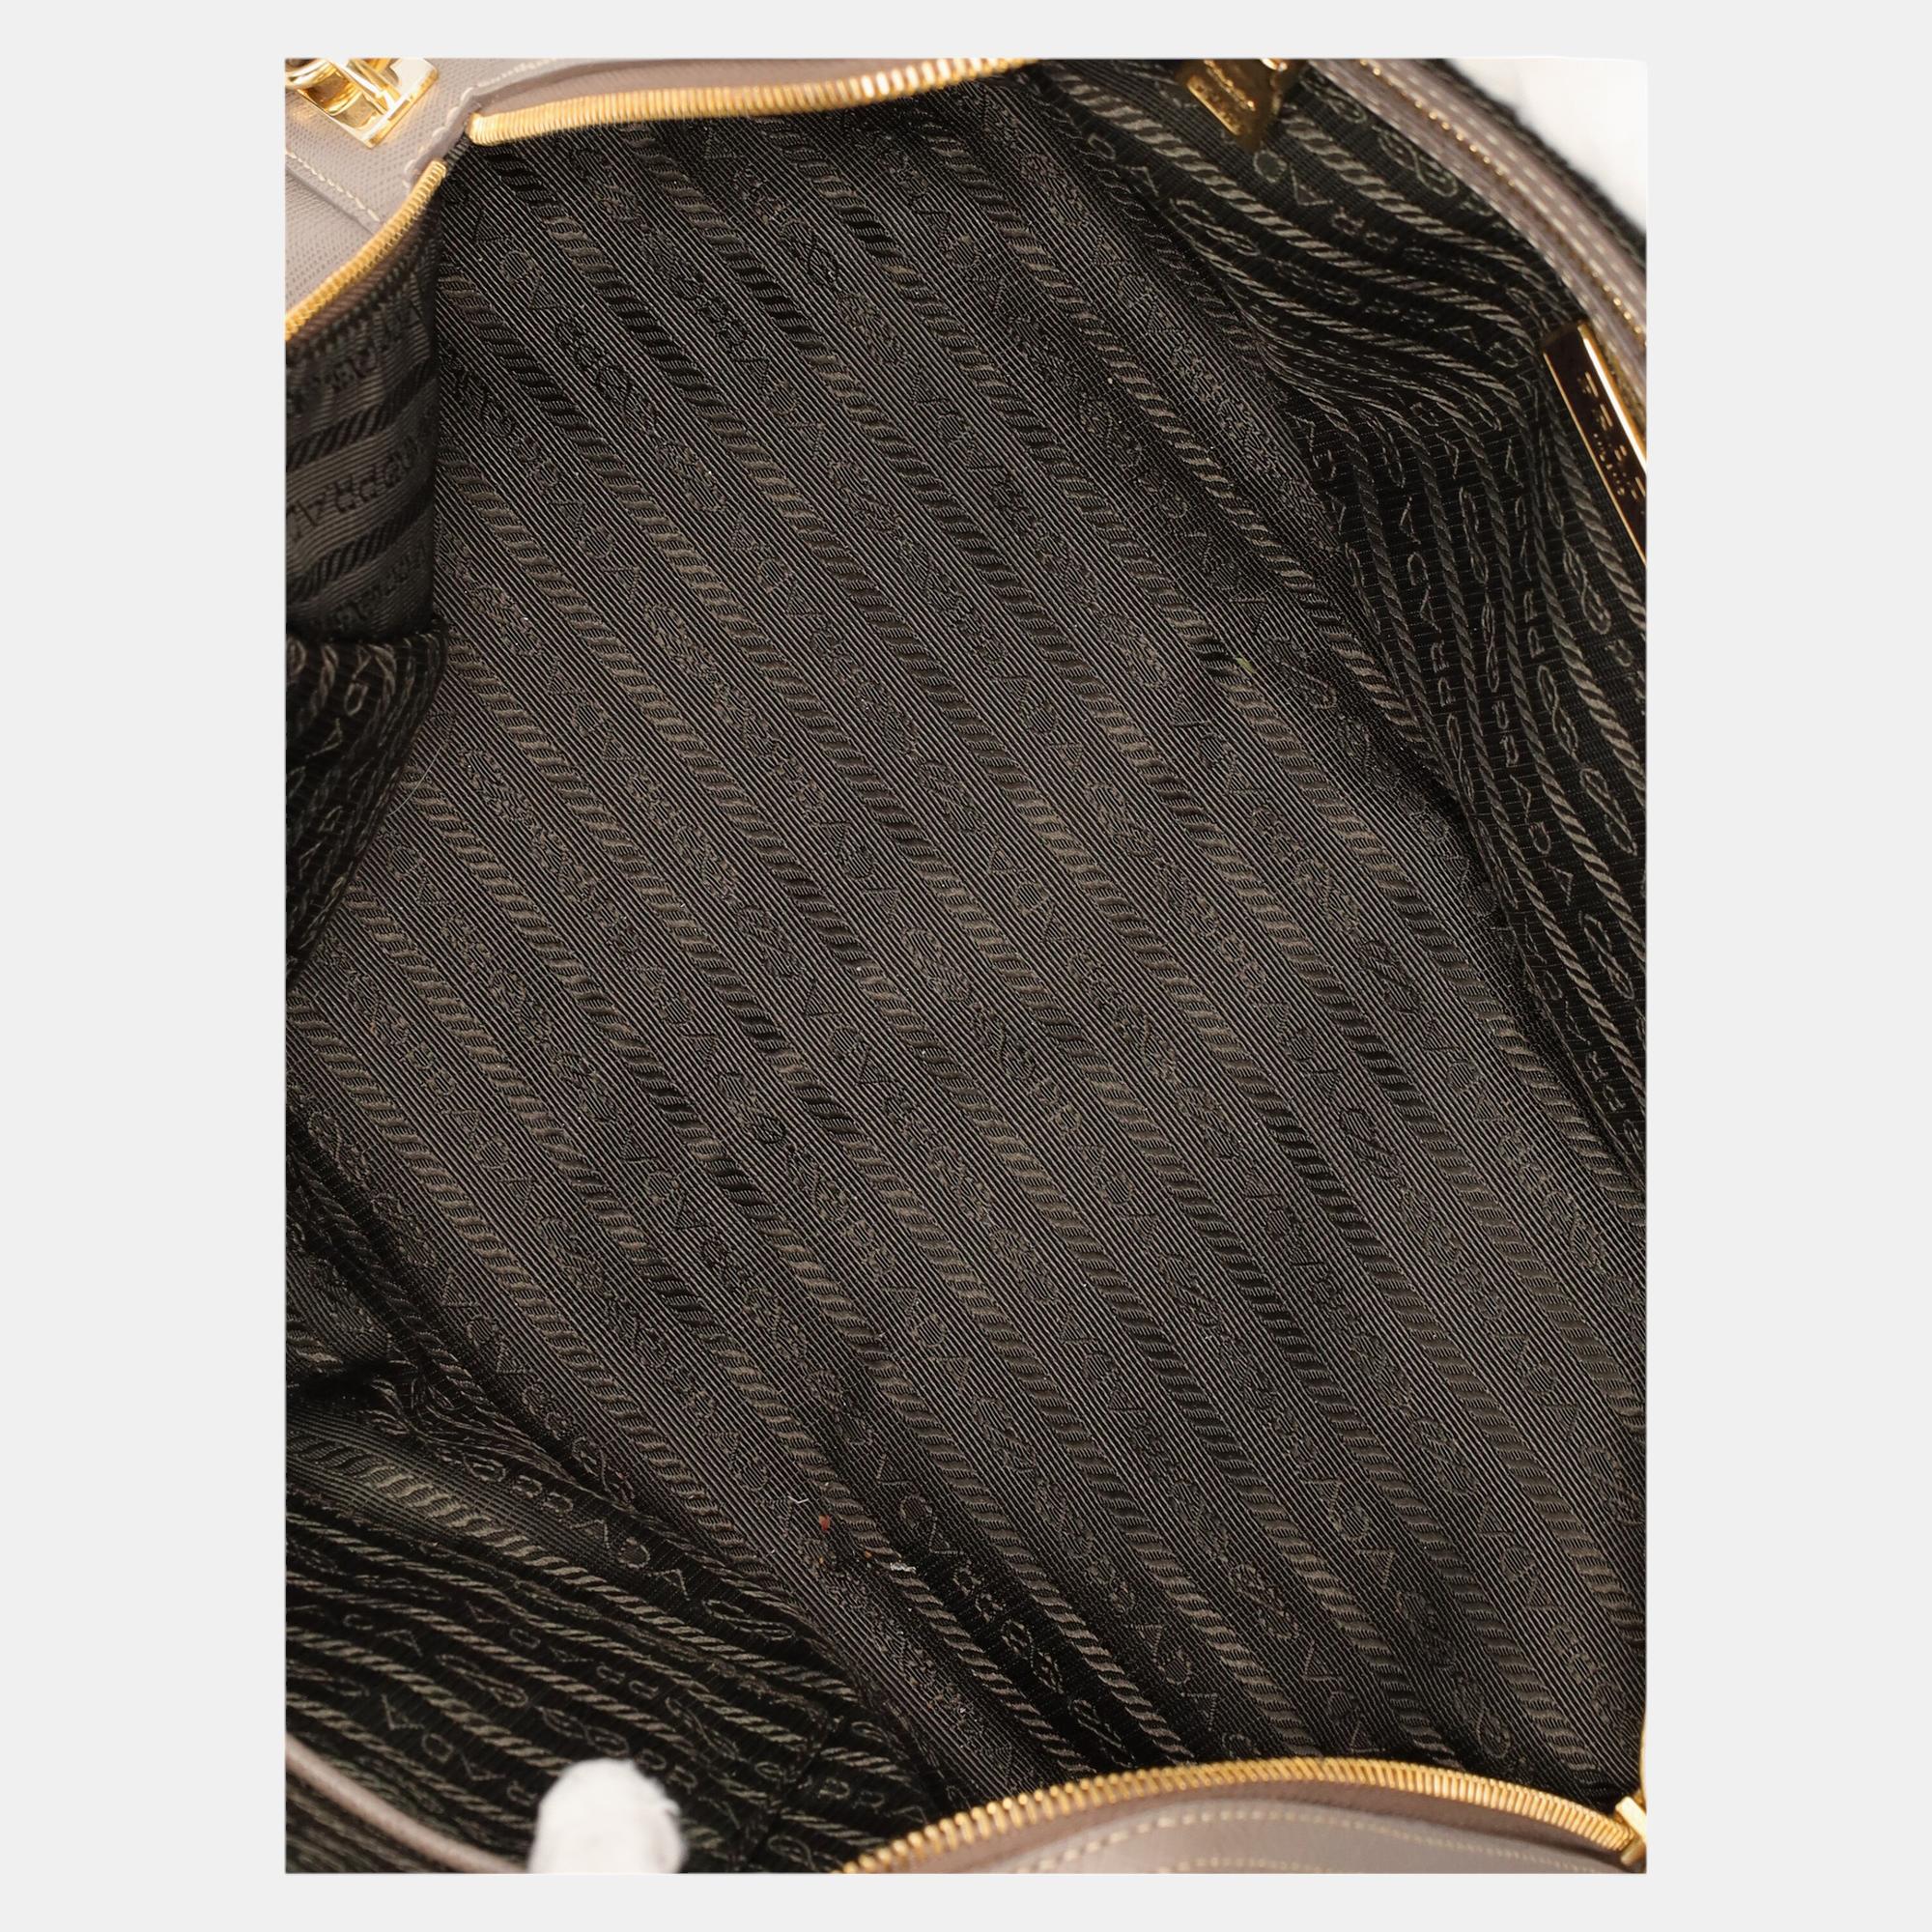 Prada  Women's Leather Tote Bag - Grey - One Size